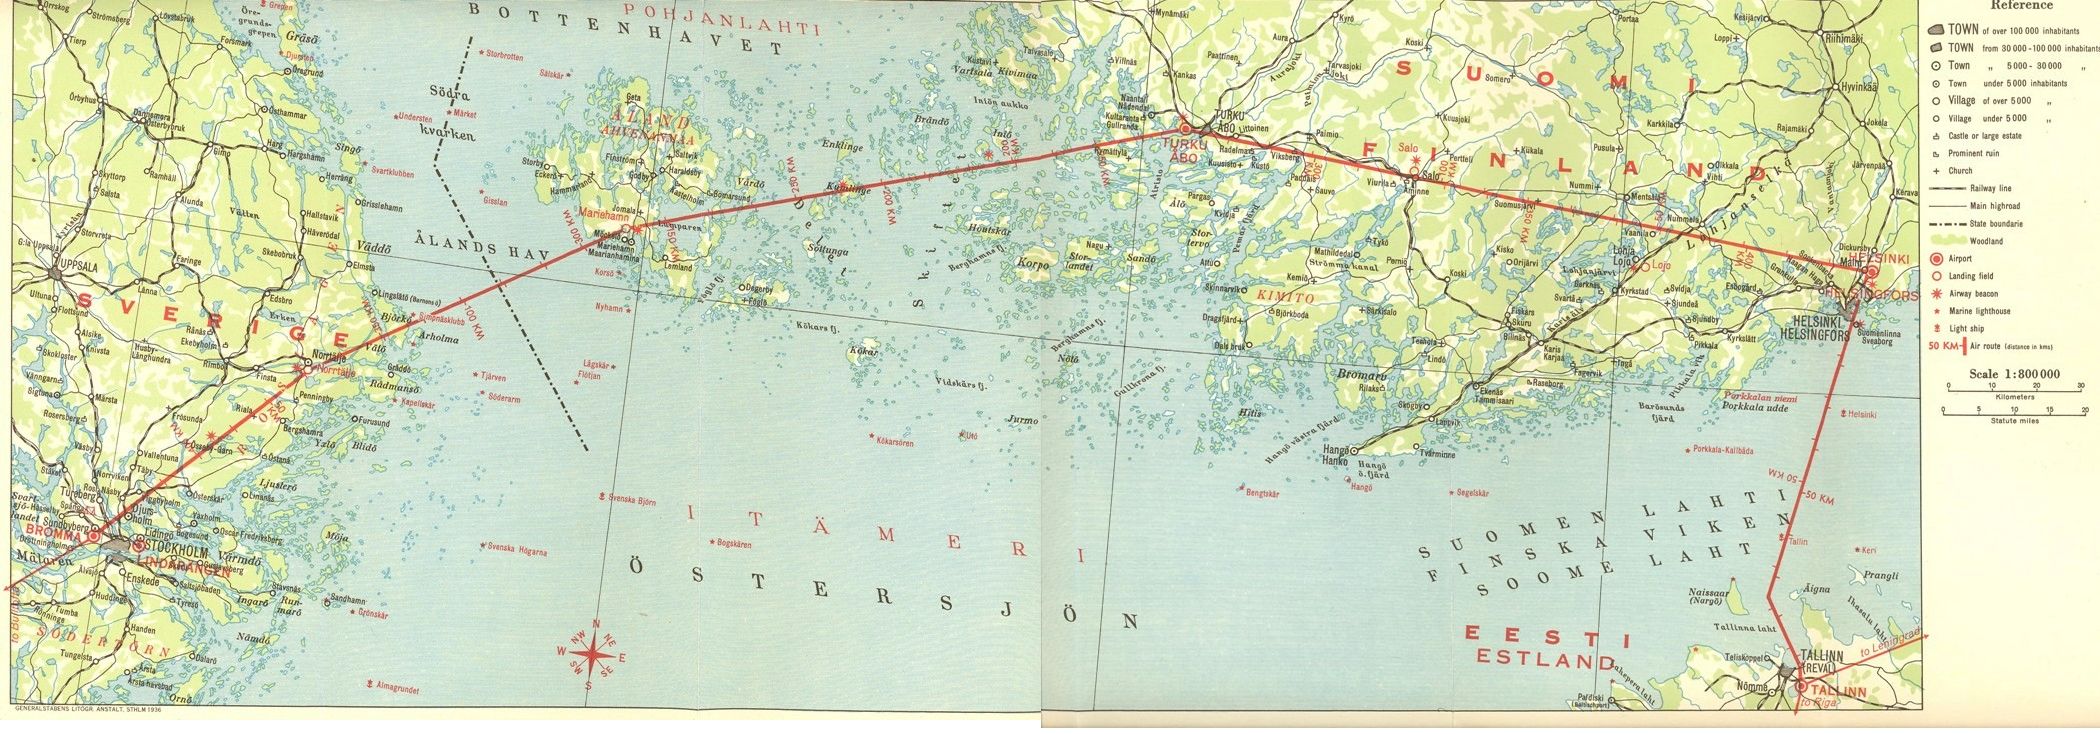 Sverige-Finland Route maps , Bo Justusson